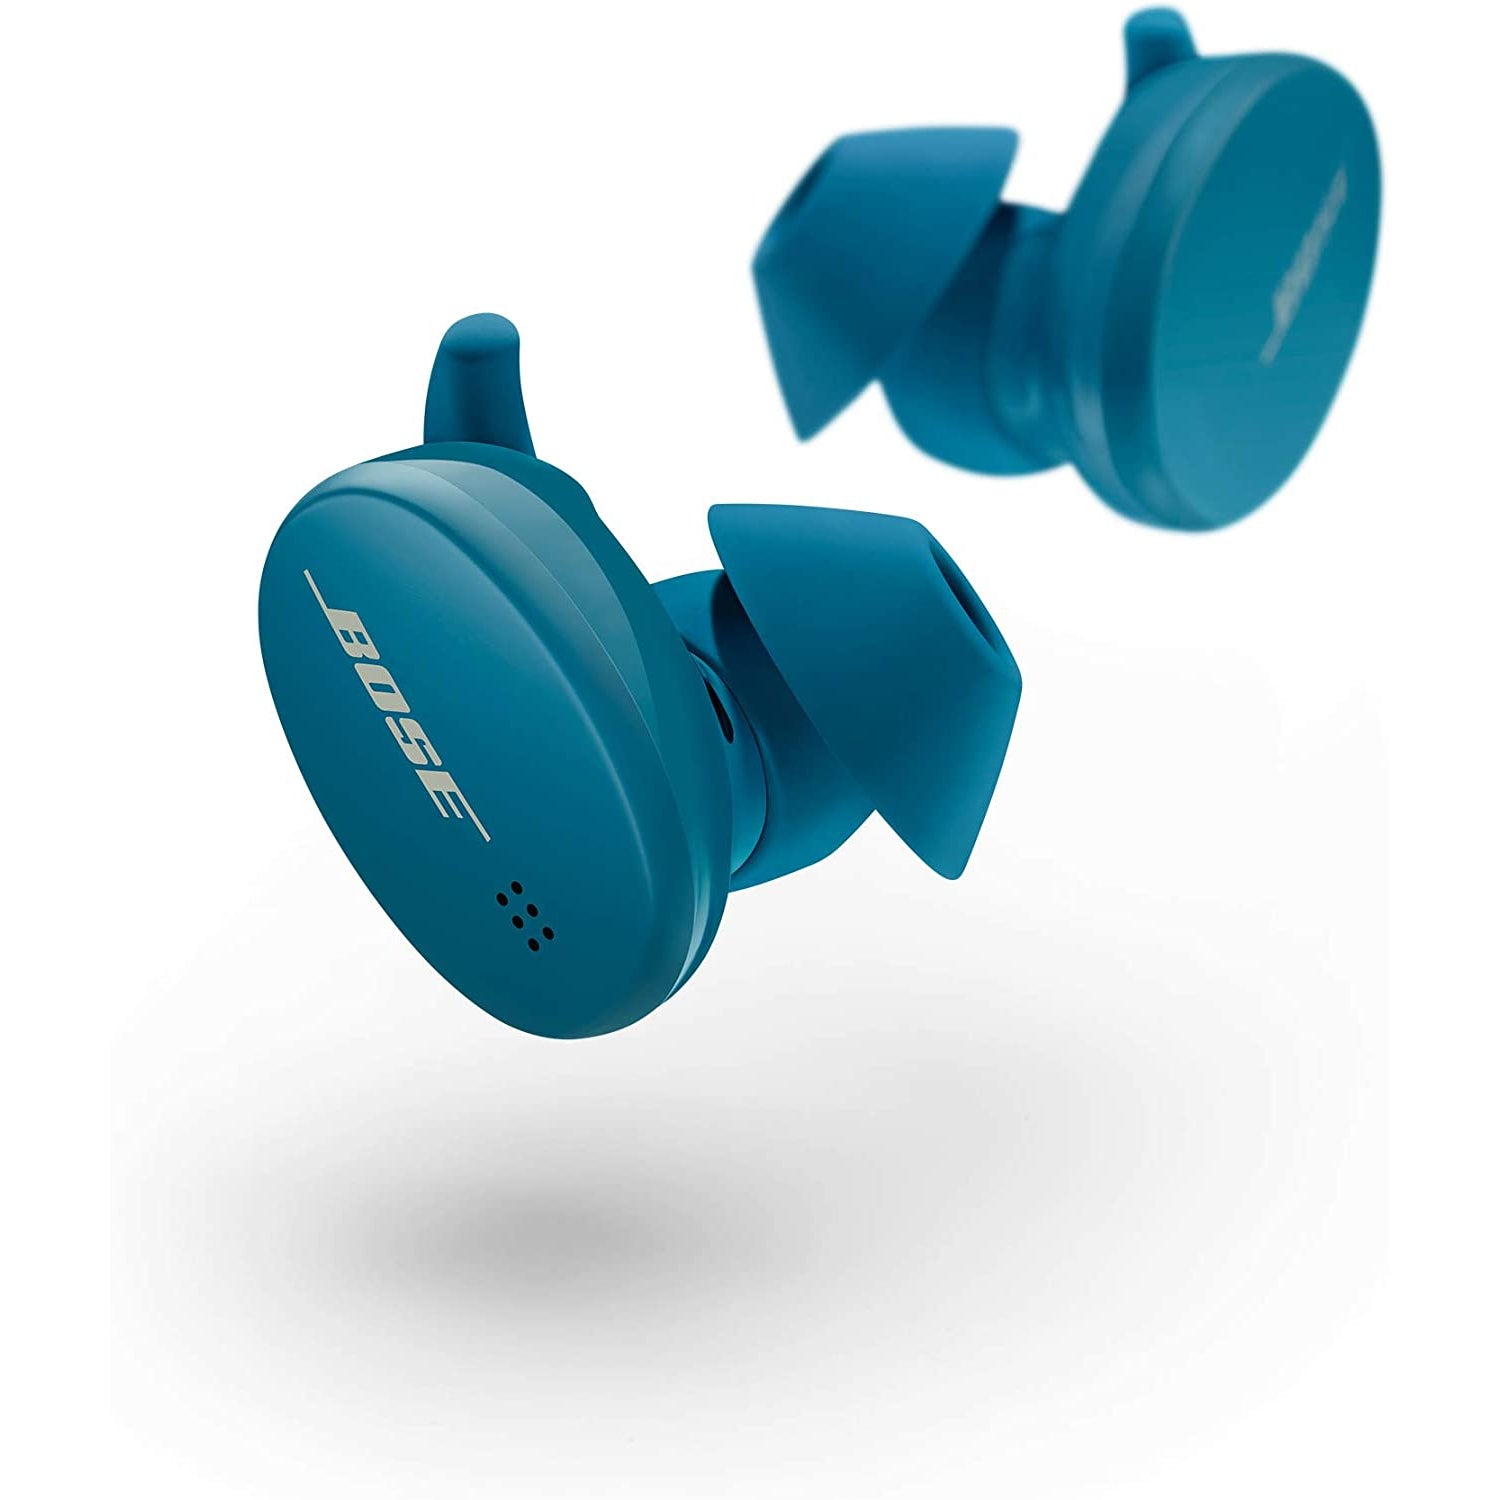 Bose Sport In-Ear True Wireless Earbuds - Baltic Blue - Refurbished Pristine